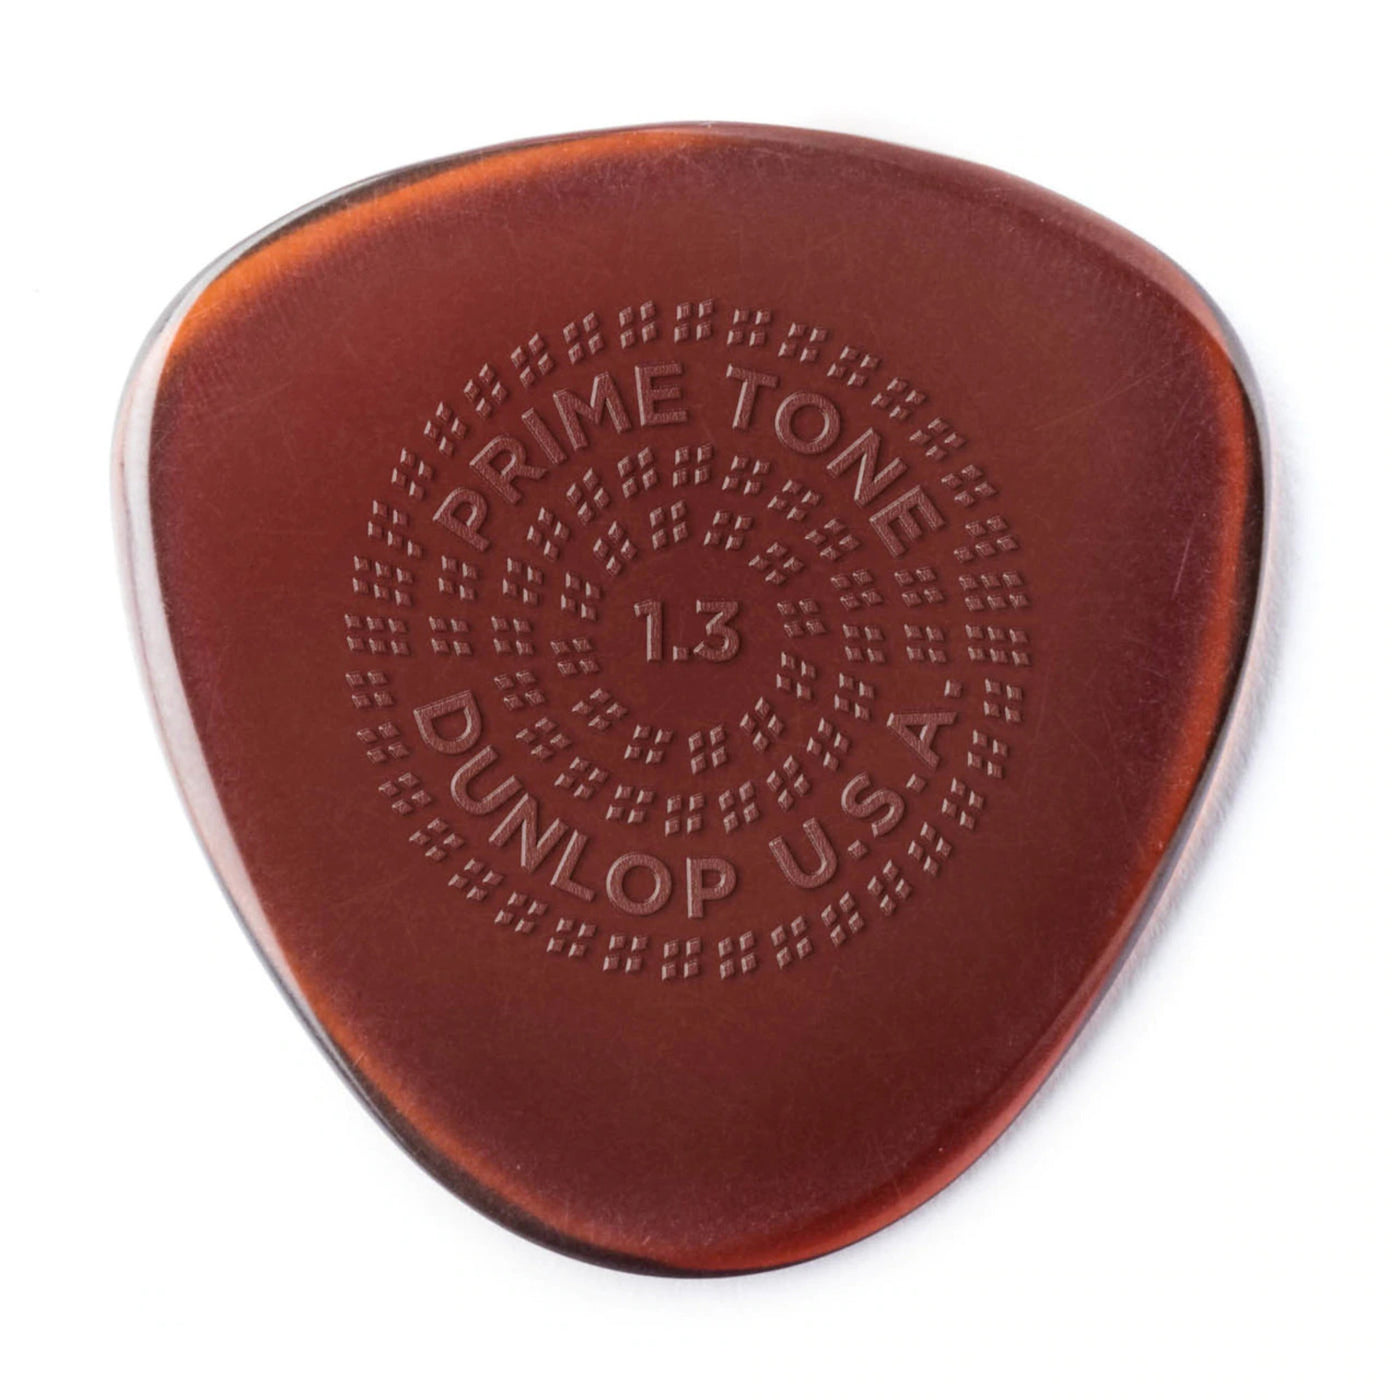 Dunlop 514P130 Primetone Semi Round Grip Pick 1.3mm- 3 Pack